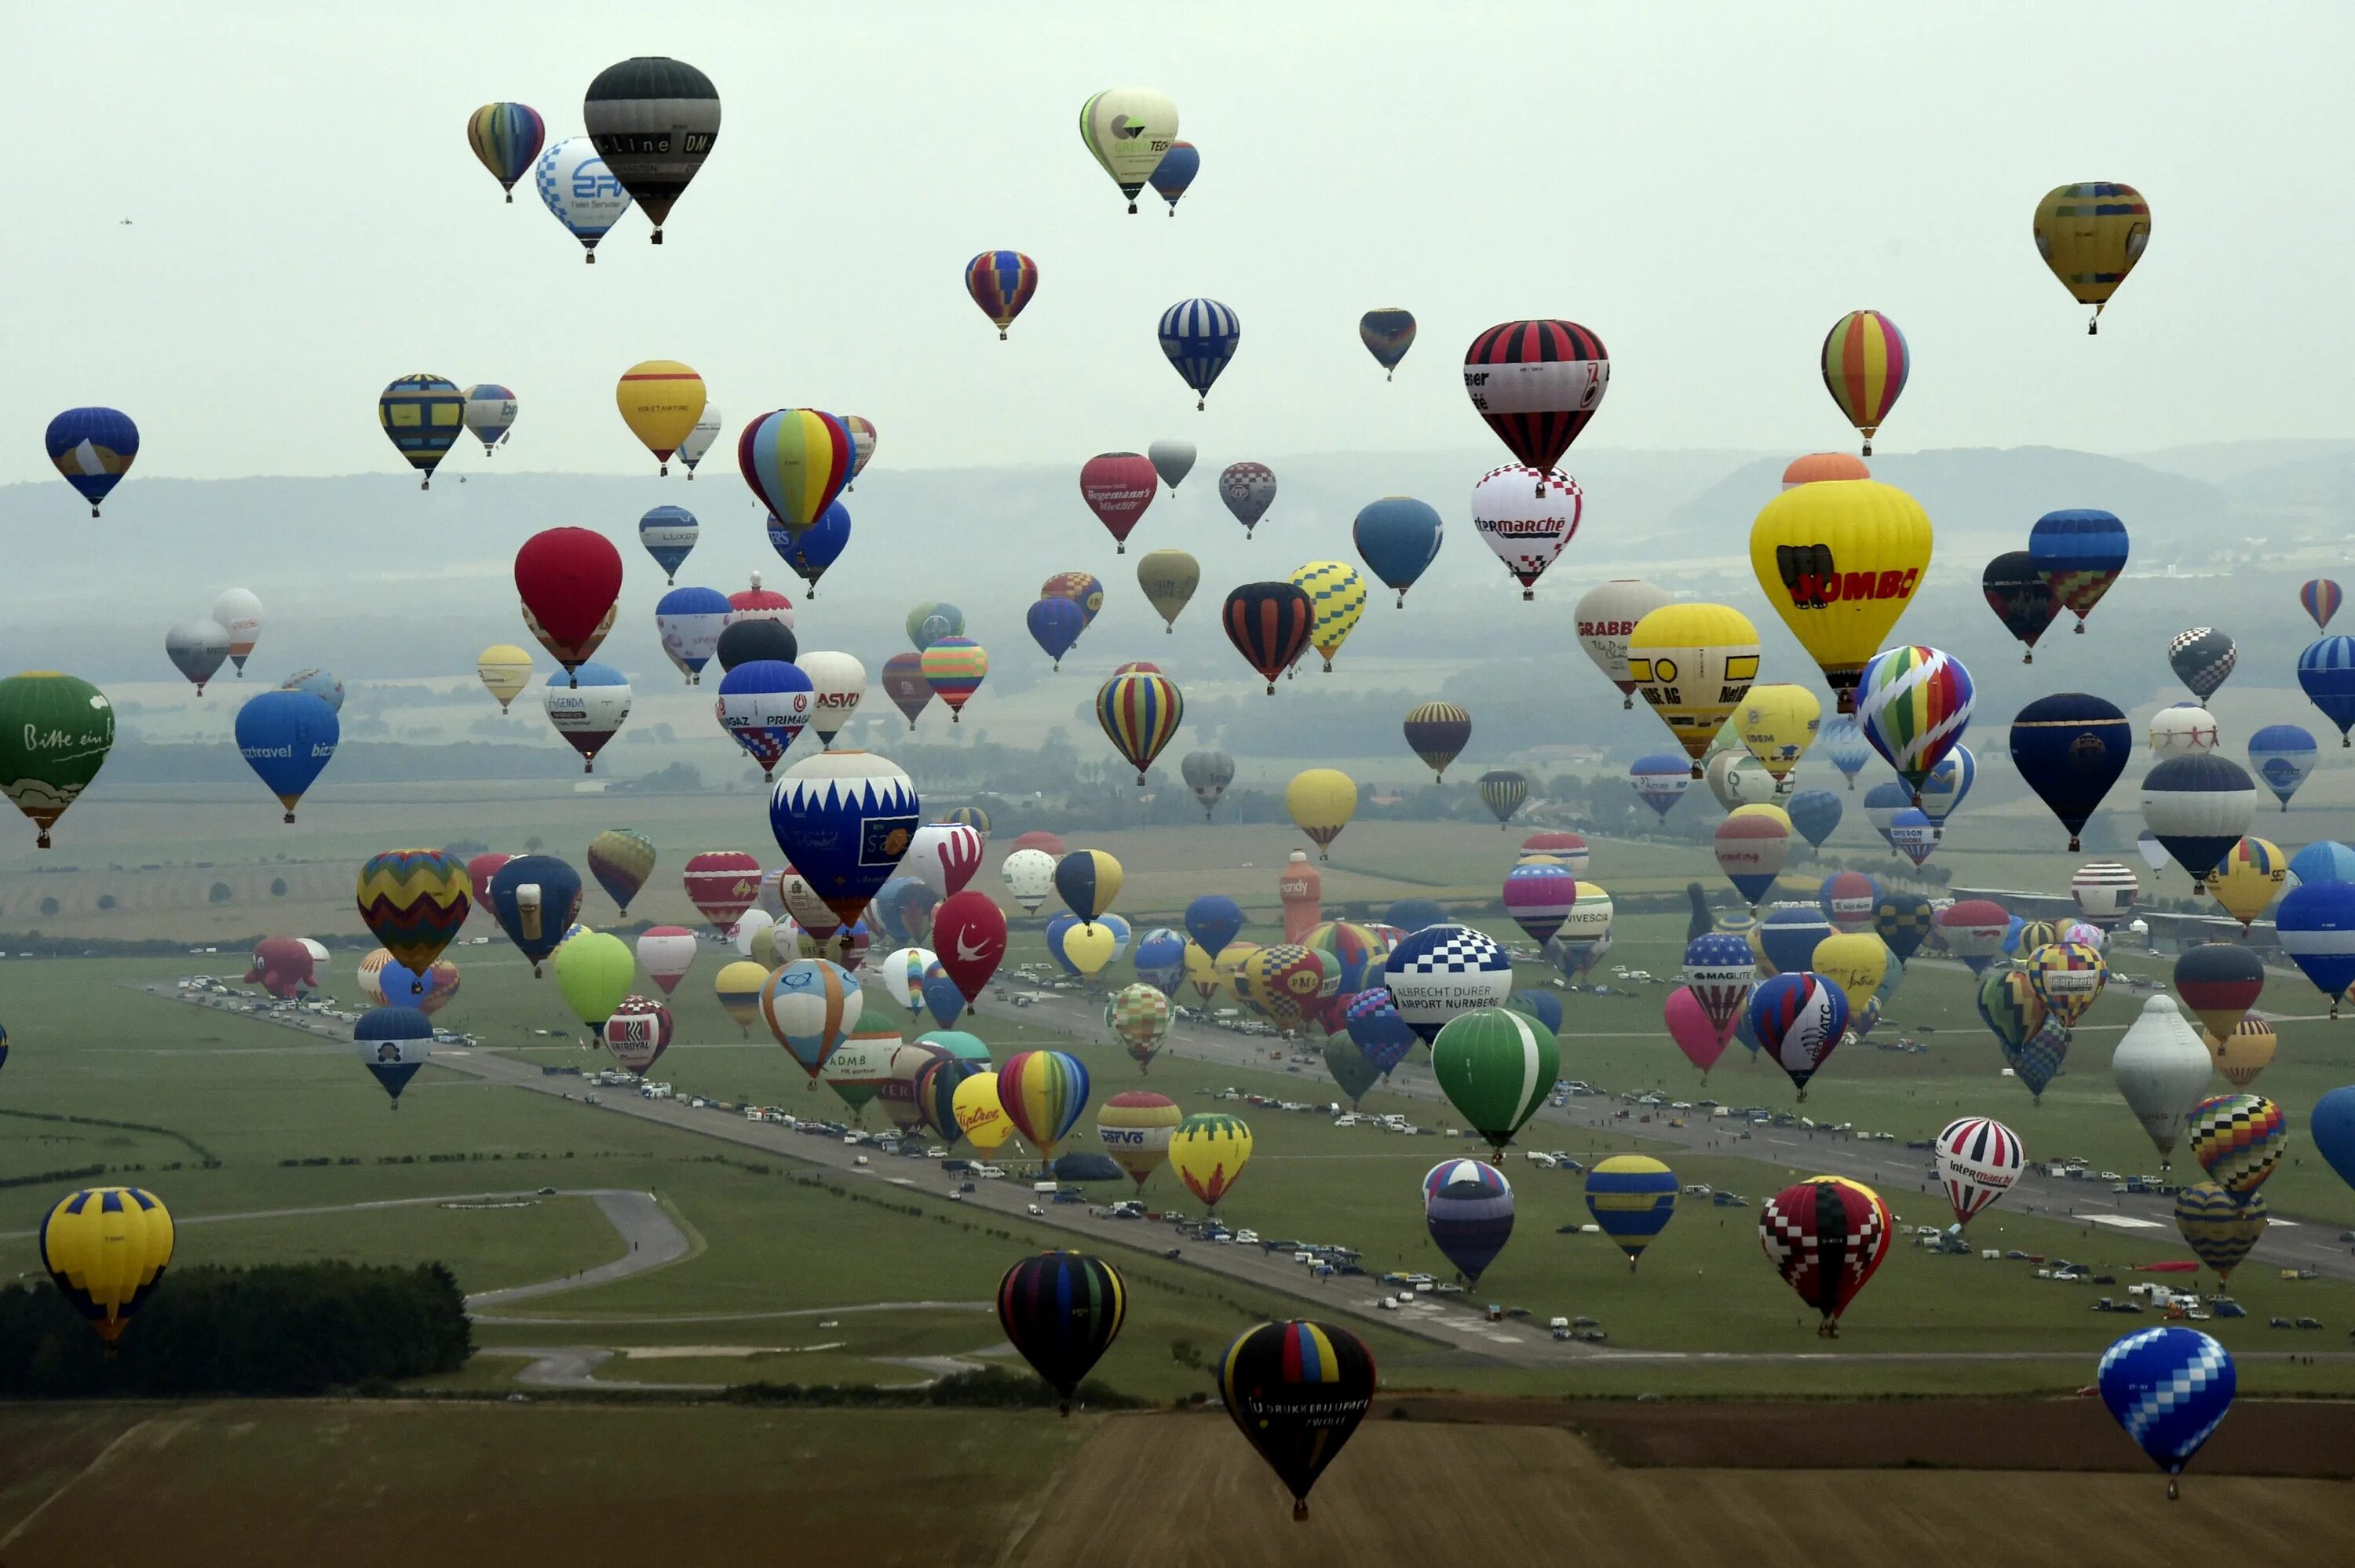 Воздухоплавание на воздушном шаре. Фестиваль воздушных шаров. Парад воздушных шаров. Воздушные шары аэростаты. Фестиваль воздушных шаров во Франции.